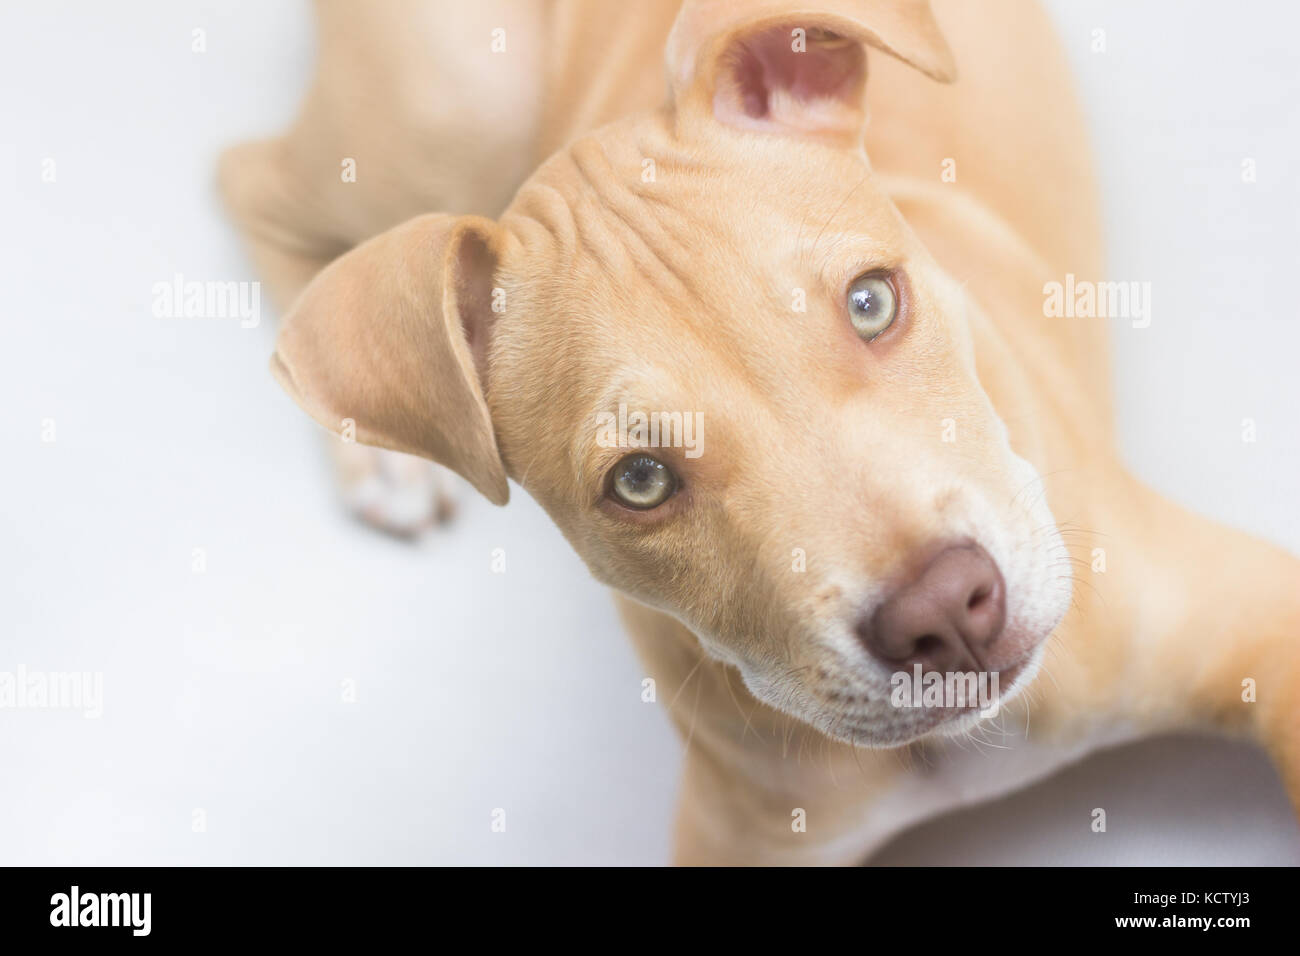 Puppy pit bull dog portrait face Stock Photo